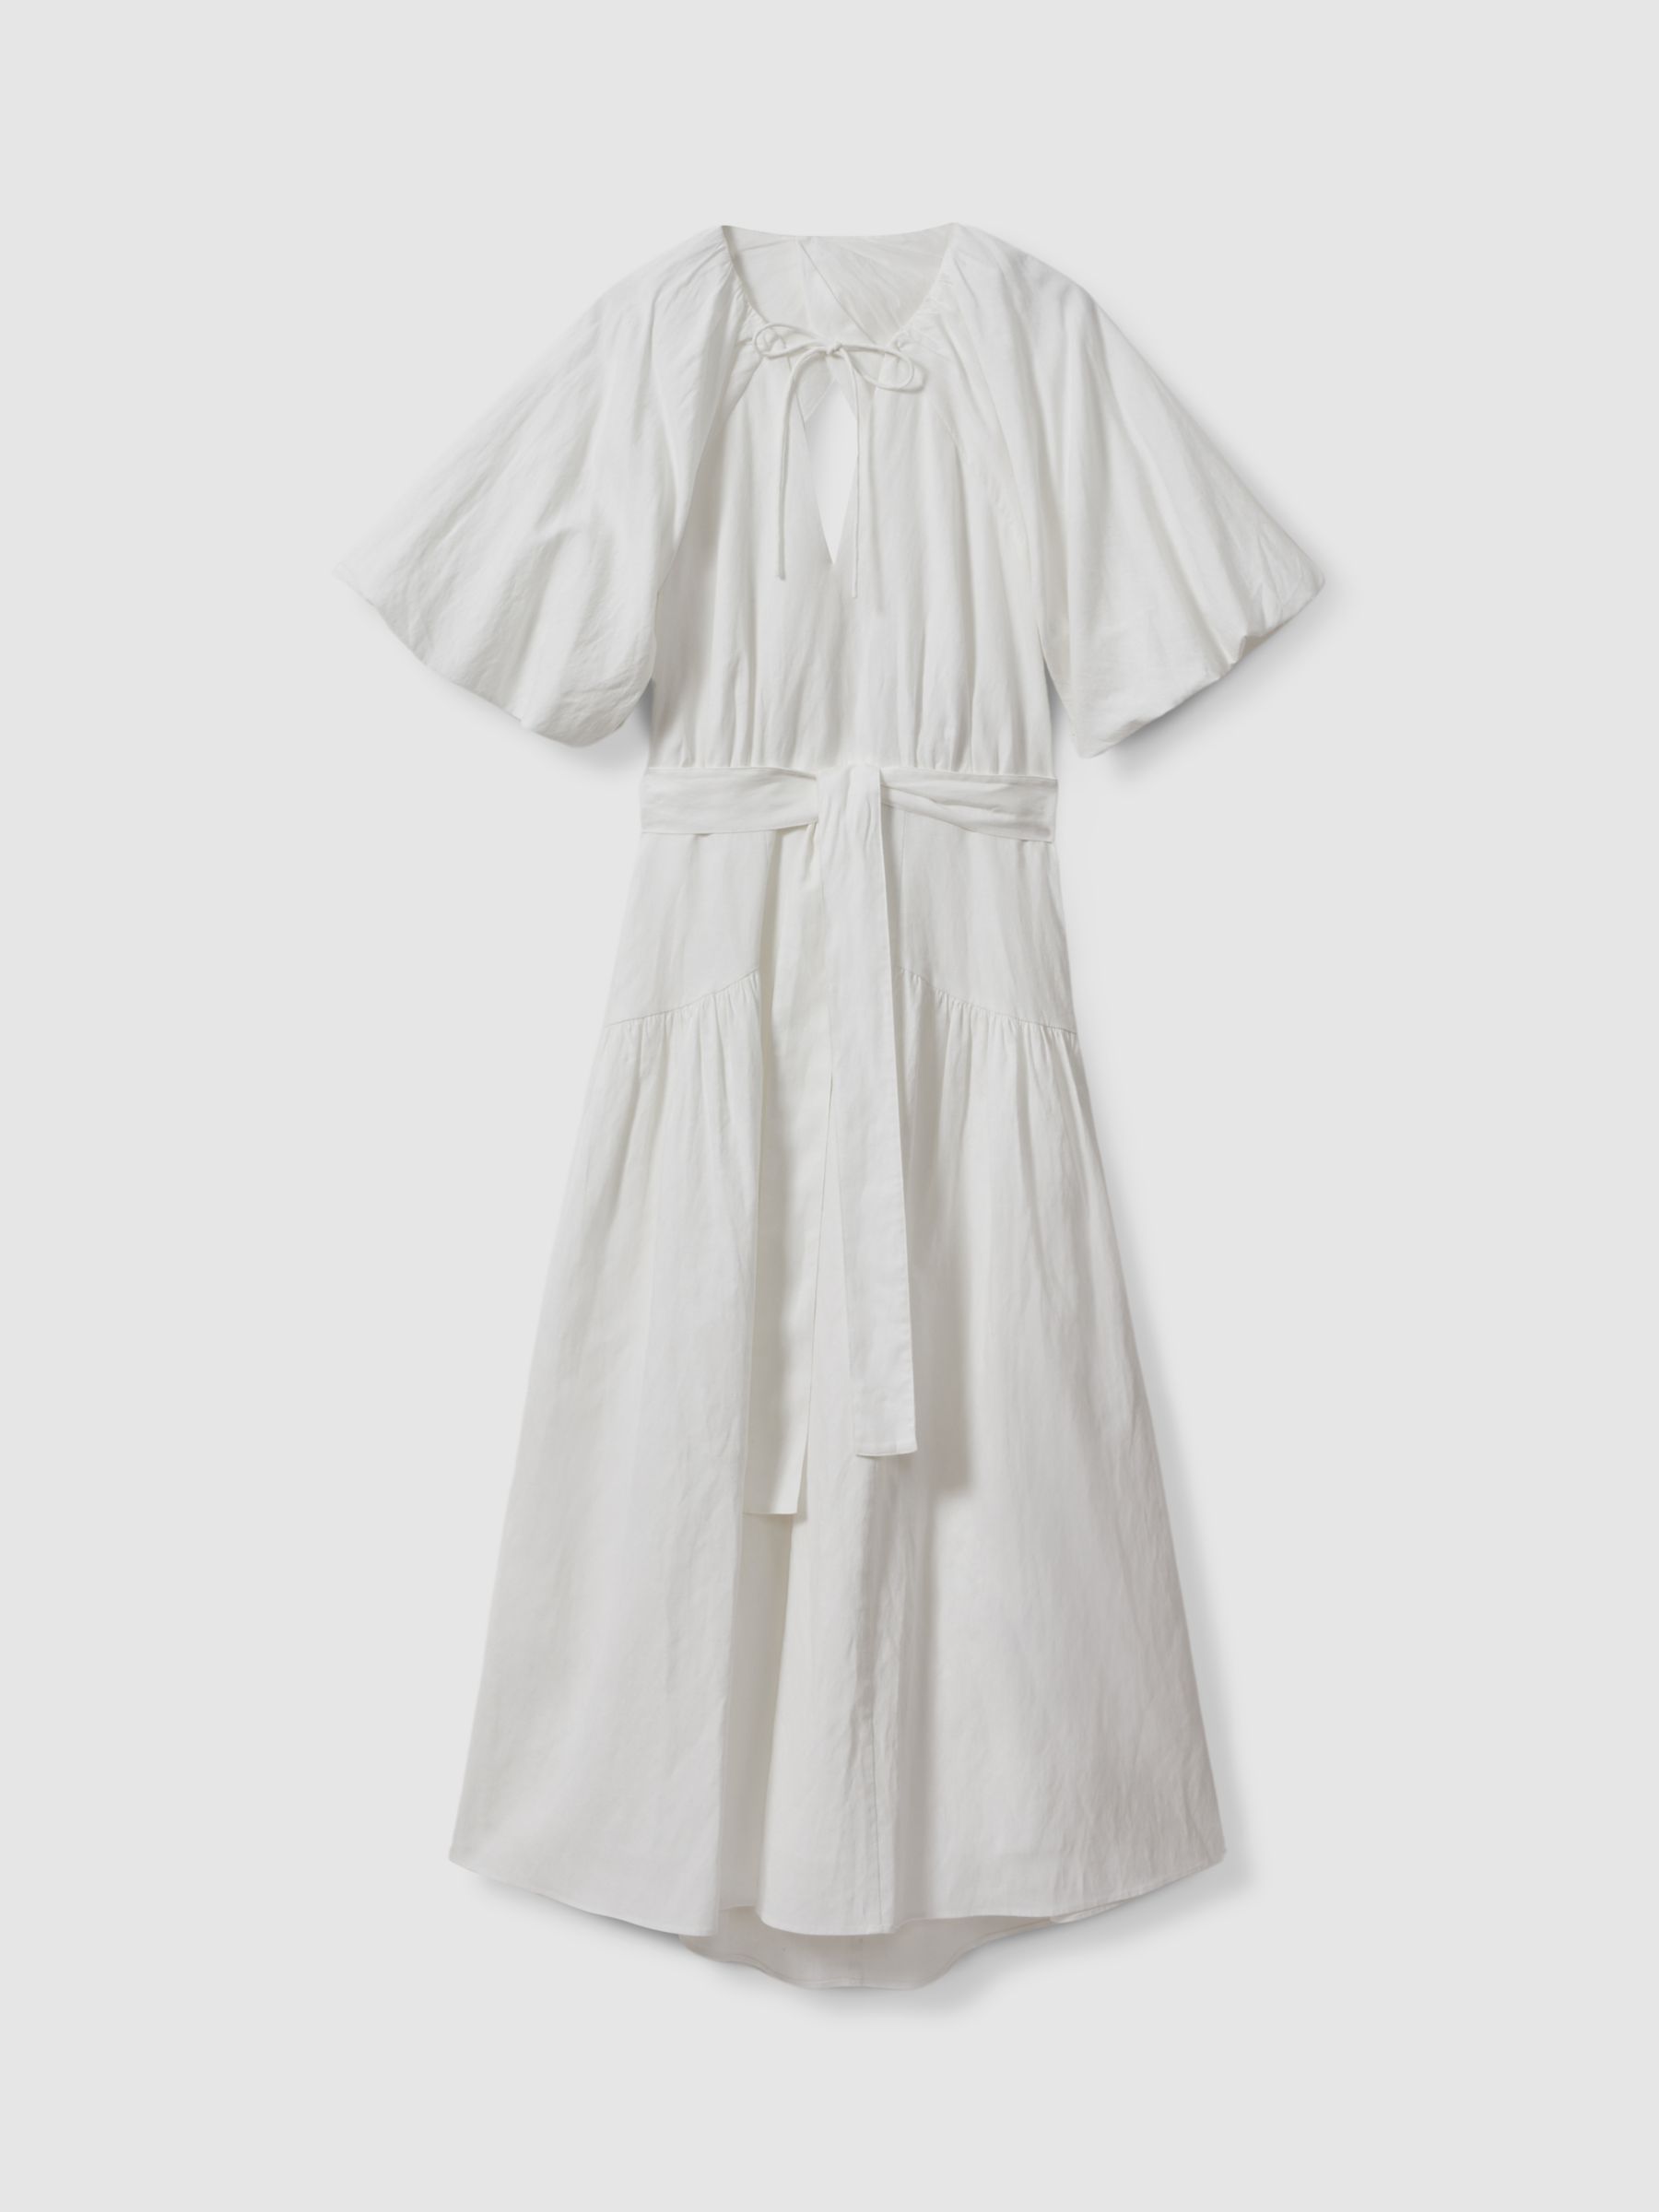 Reiss Alice Puff Sleeve Midi Dress, White, 6